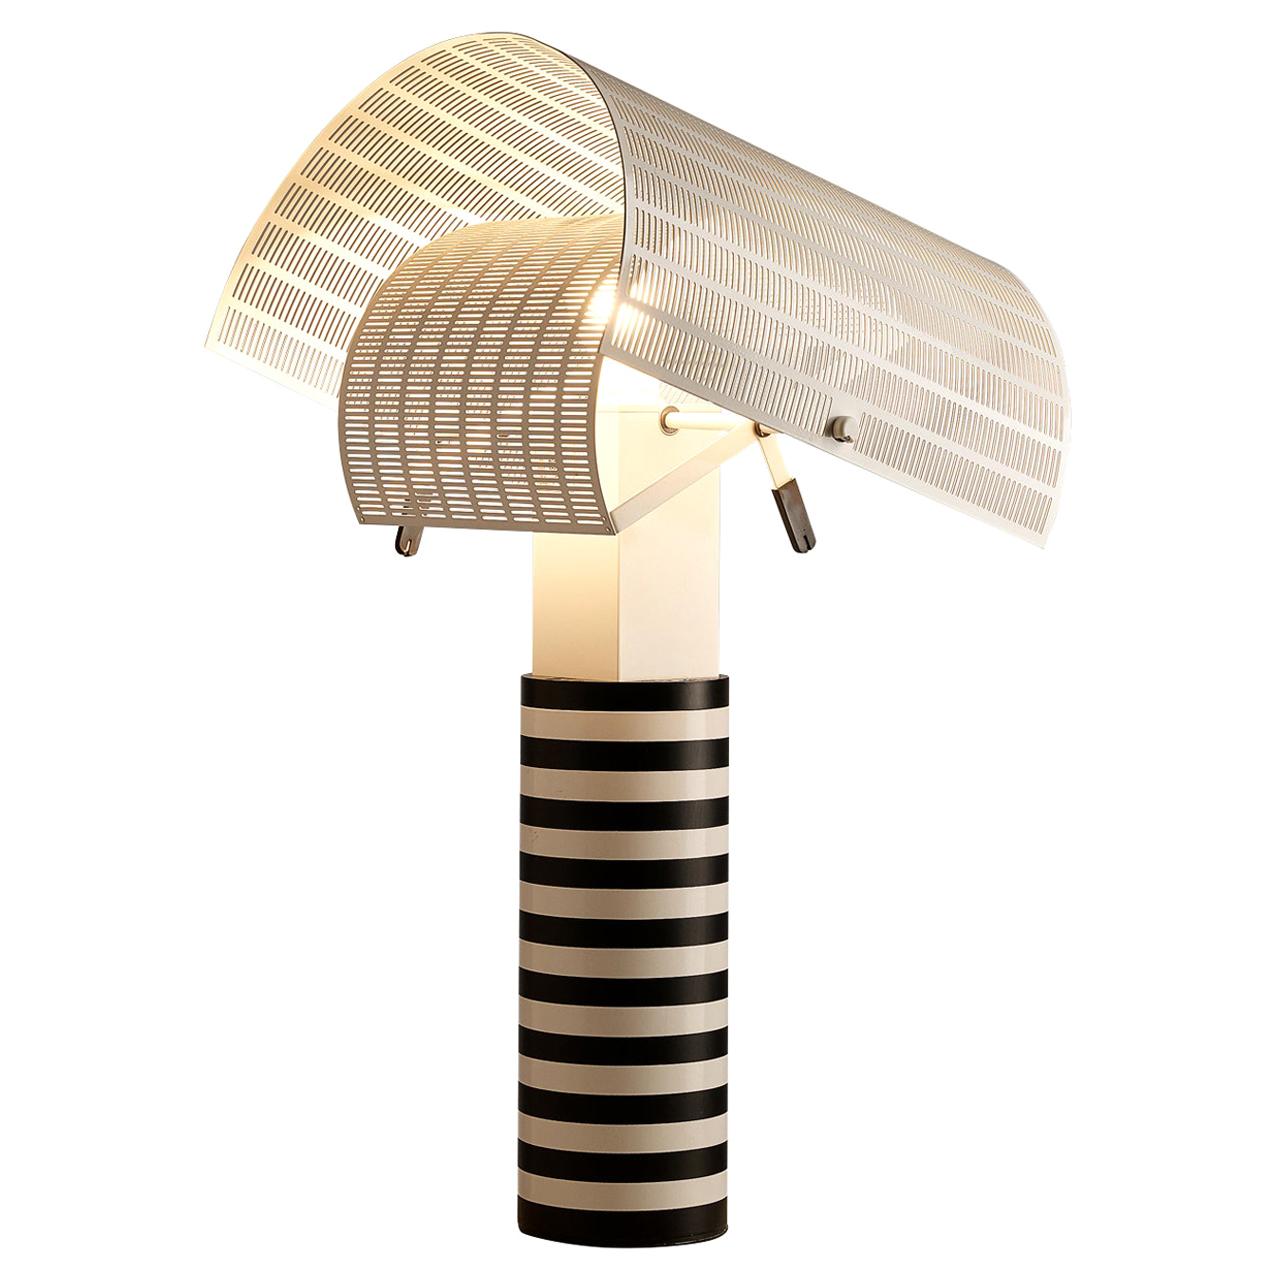 Mario Botta for Artemide 'Shogun' Table Lamp